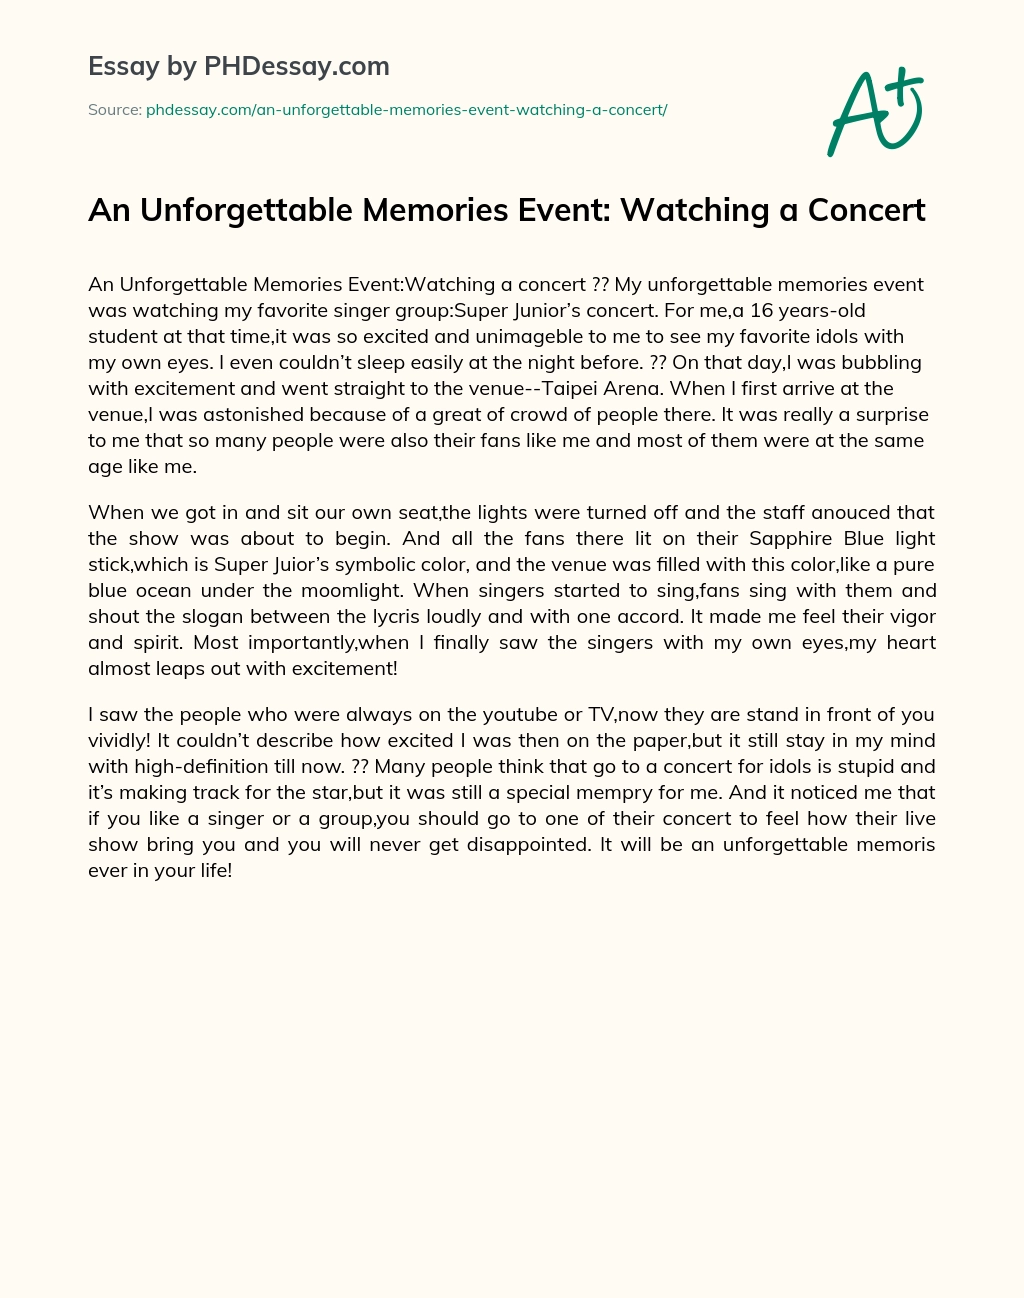 An Unforgettable Memories Event: Watching a Concert essay